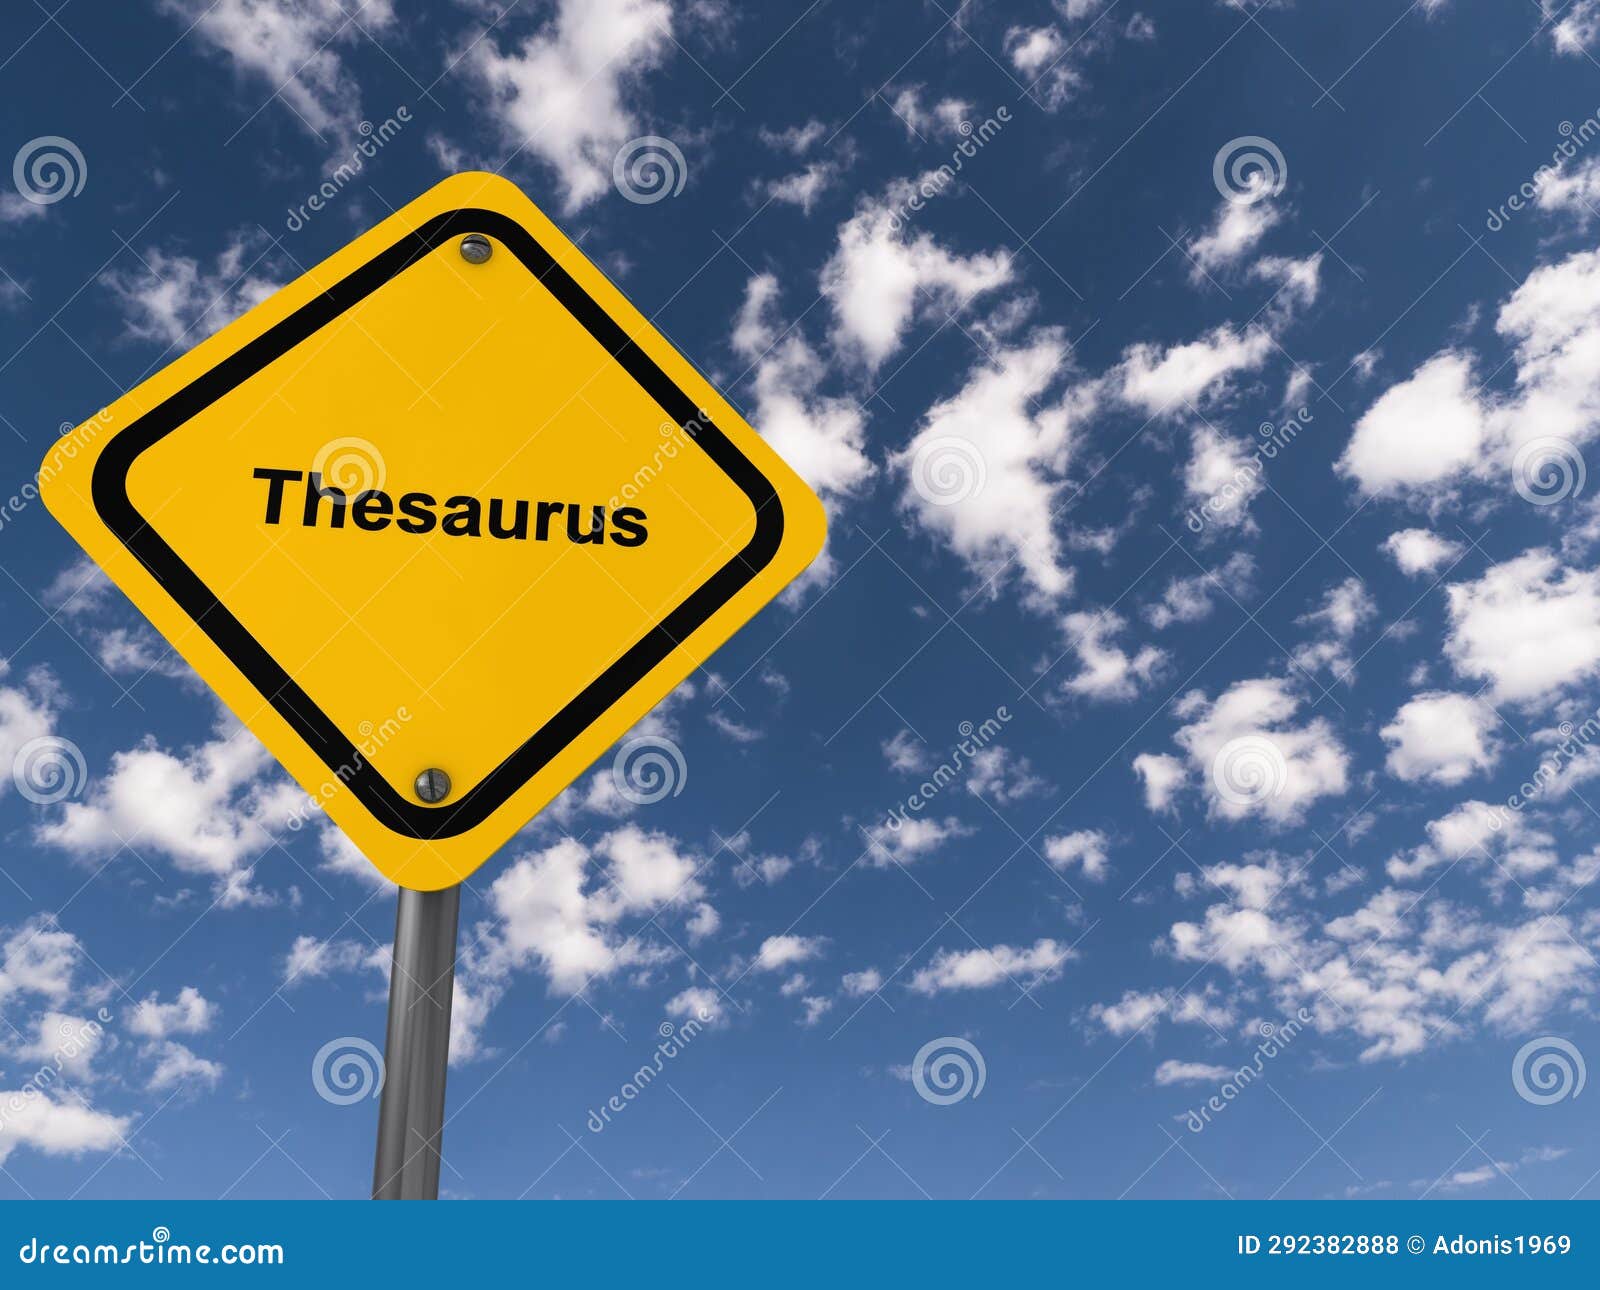 thesaurus traffic sign on blue sky